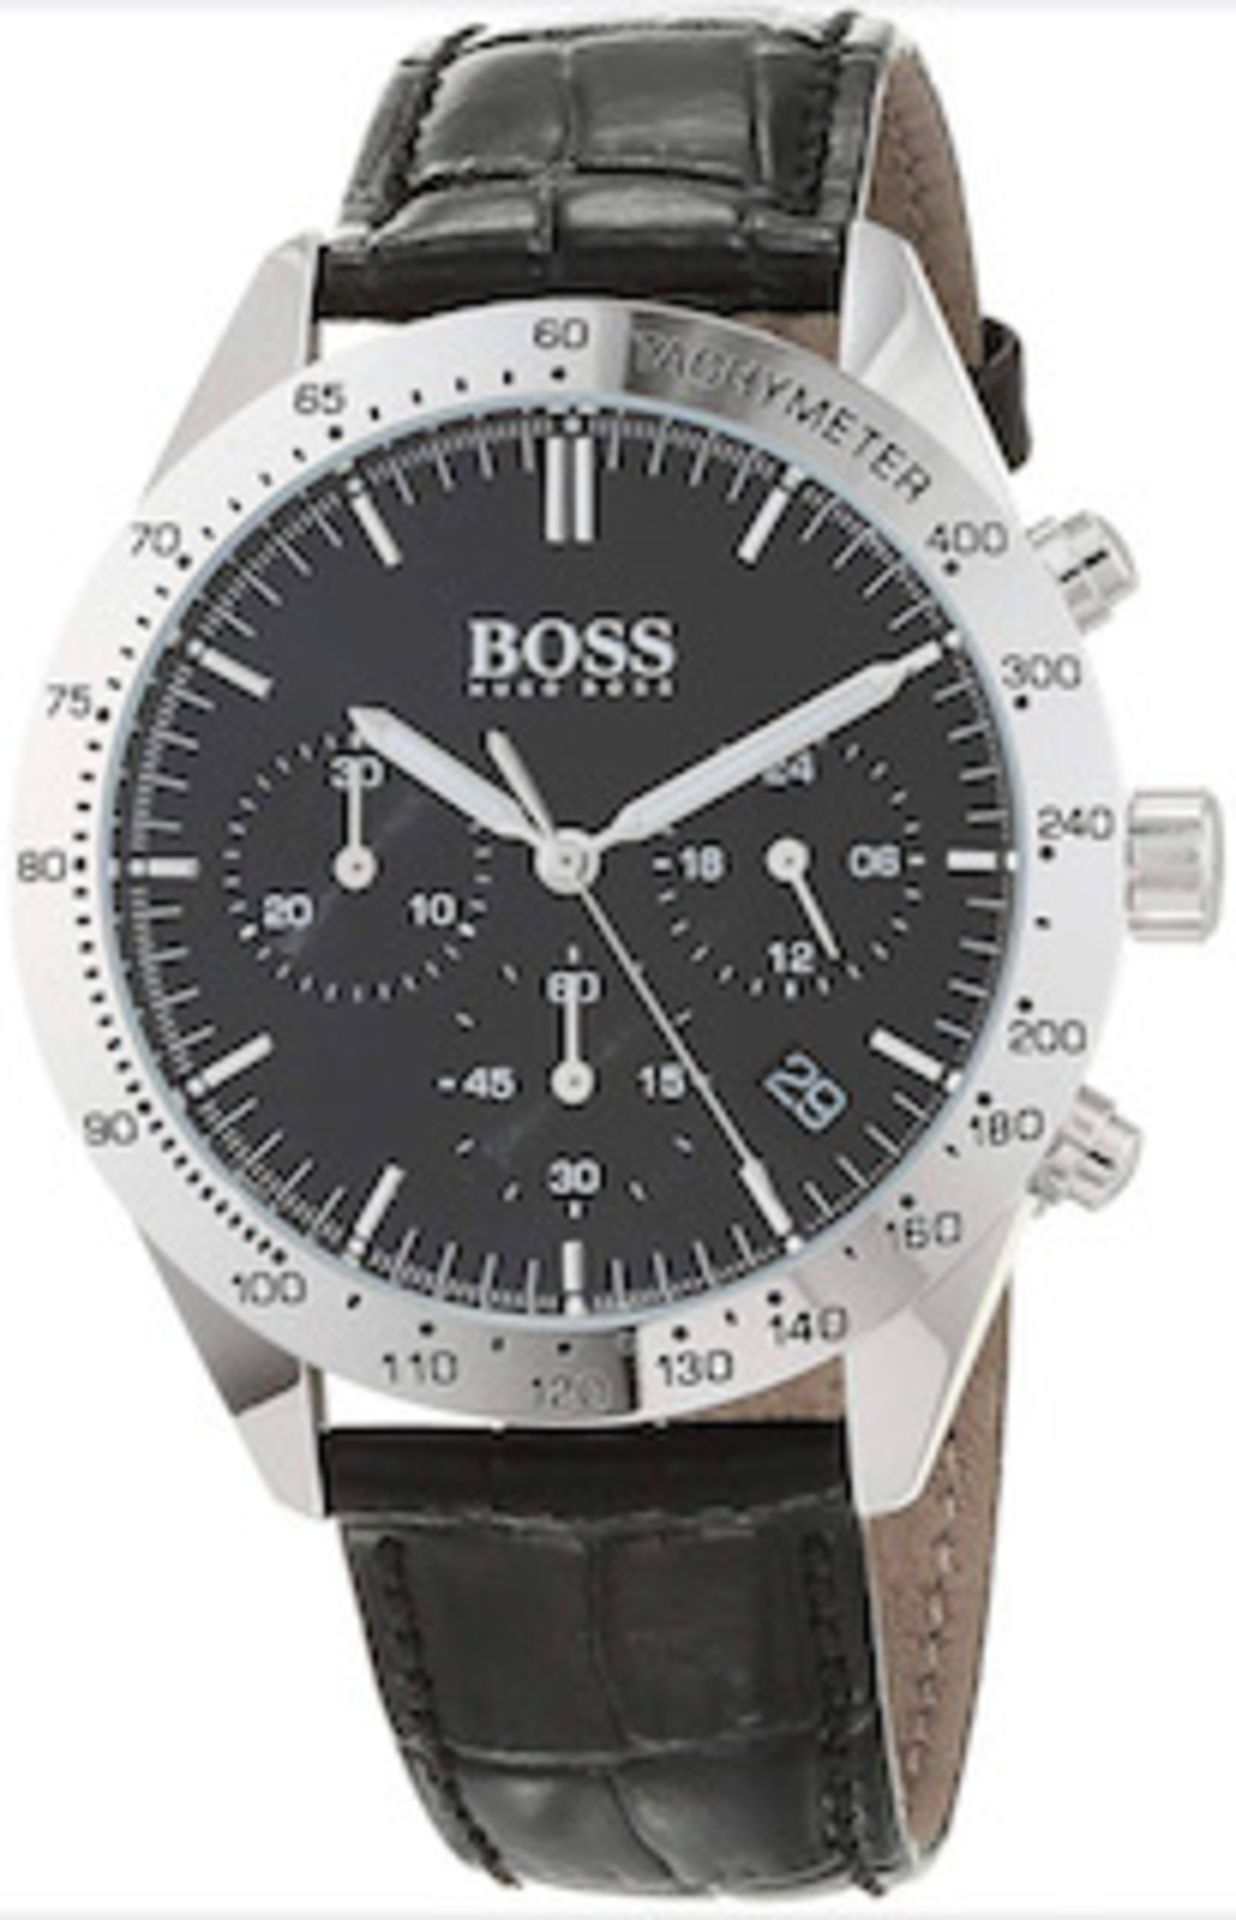 Hugo Boss 1513579 Men's Talent Black Leather Strap Quartz Chronograph Watch - Image 4 of 5